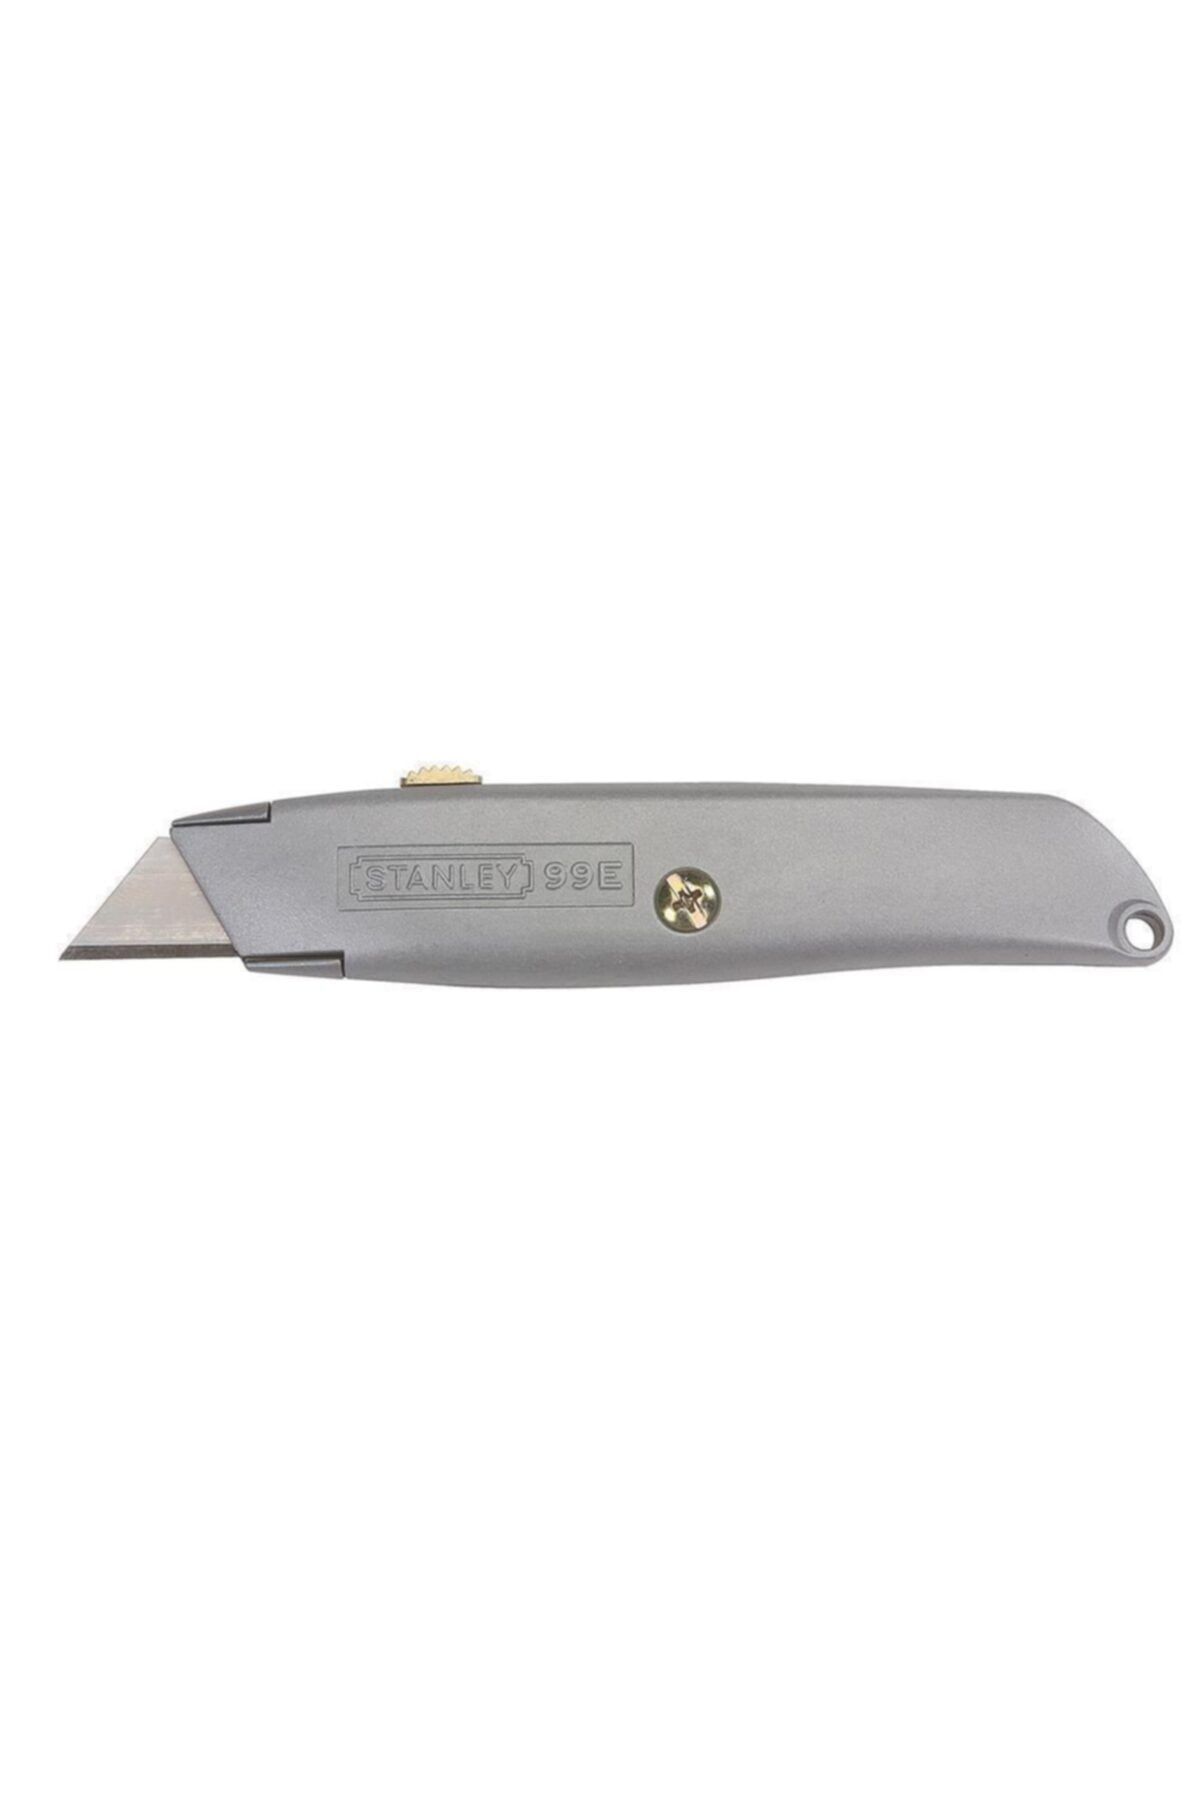 Stanley St210099 E Interlock Maket Bıçağı